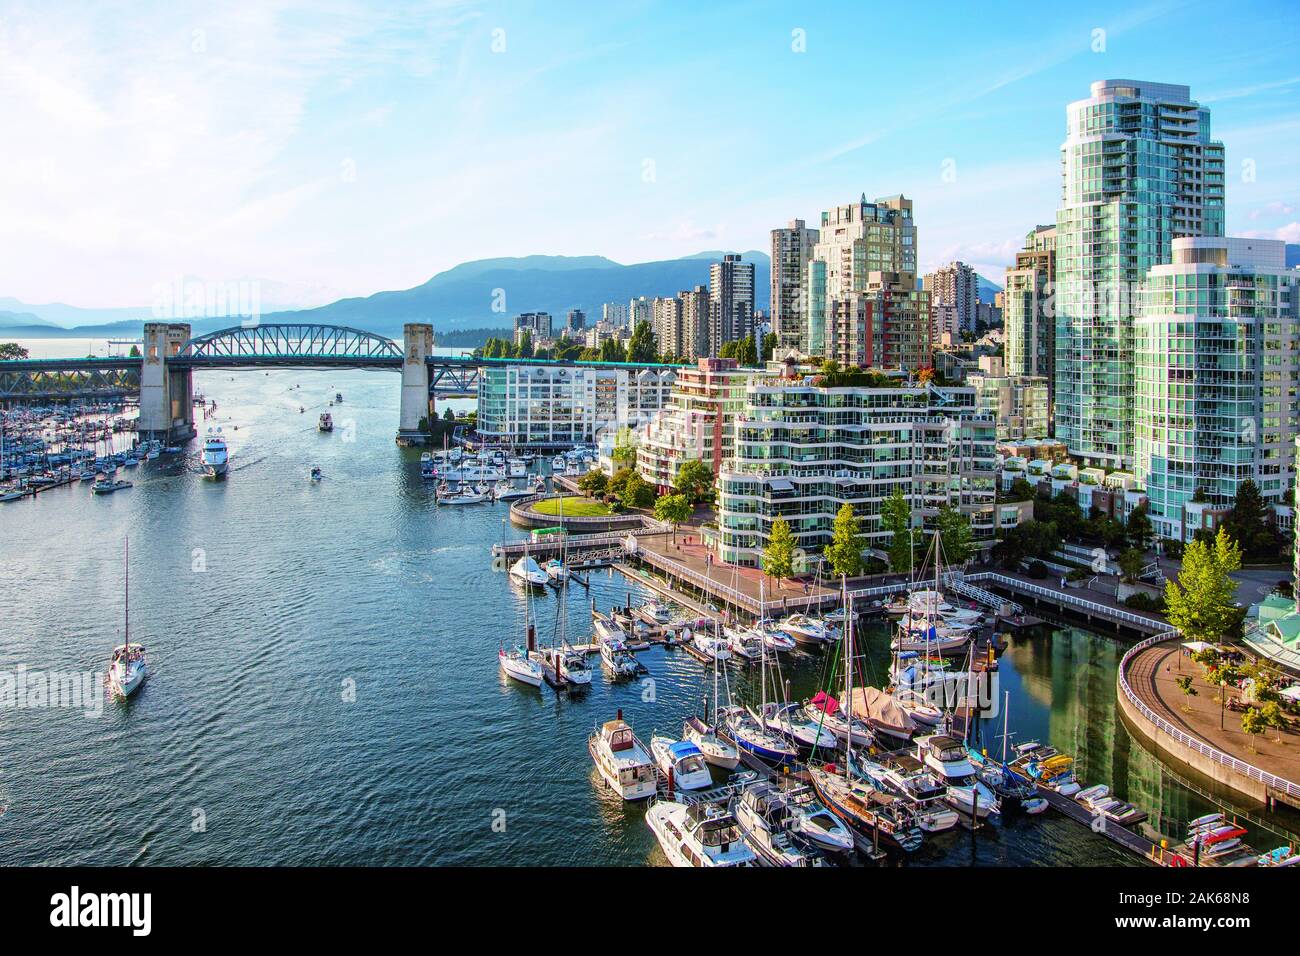 British Columbia: Vancouver, Hafenanlage am False Creek, Kanada Westen | usage worldwide Stock Photo